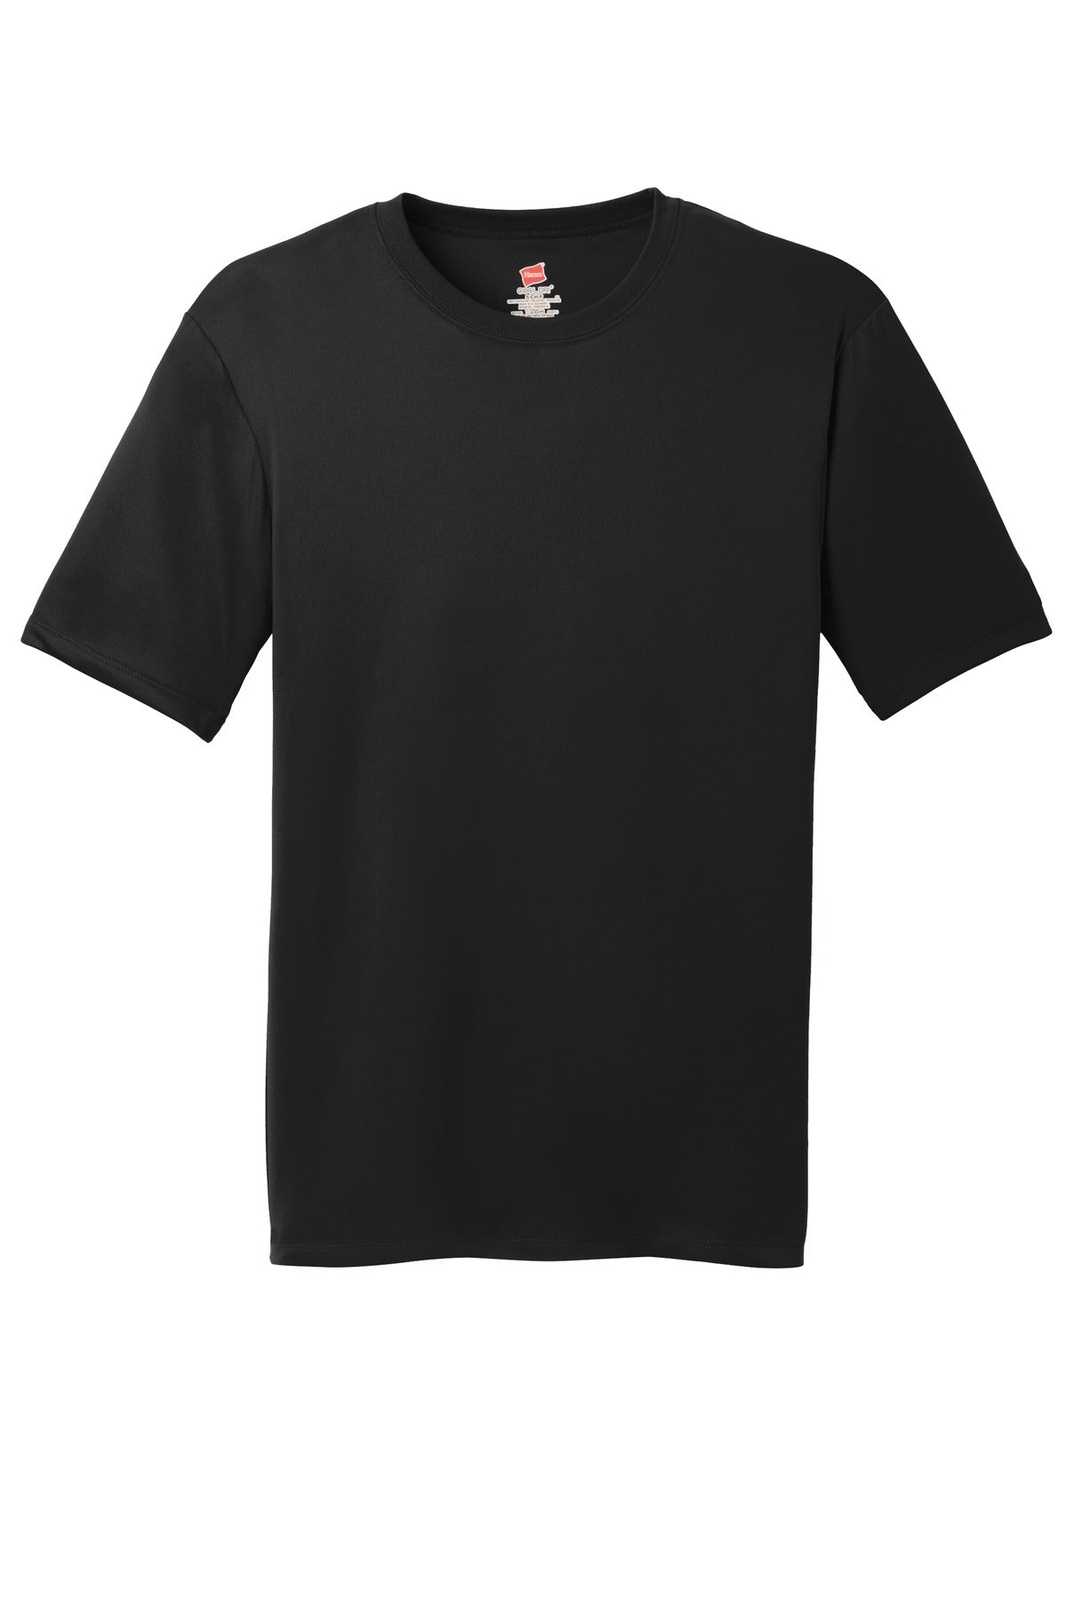 Hanes 4820 Cool Dri Performance T-Shirt - Black - HIT a Double